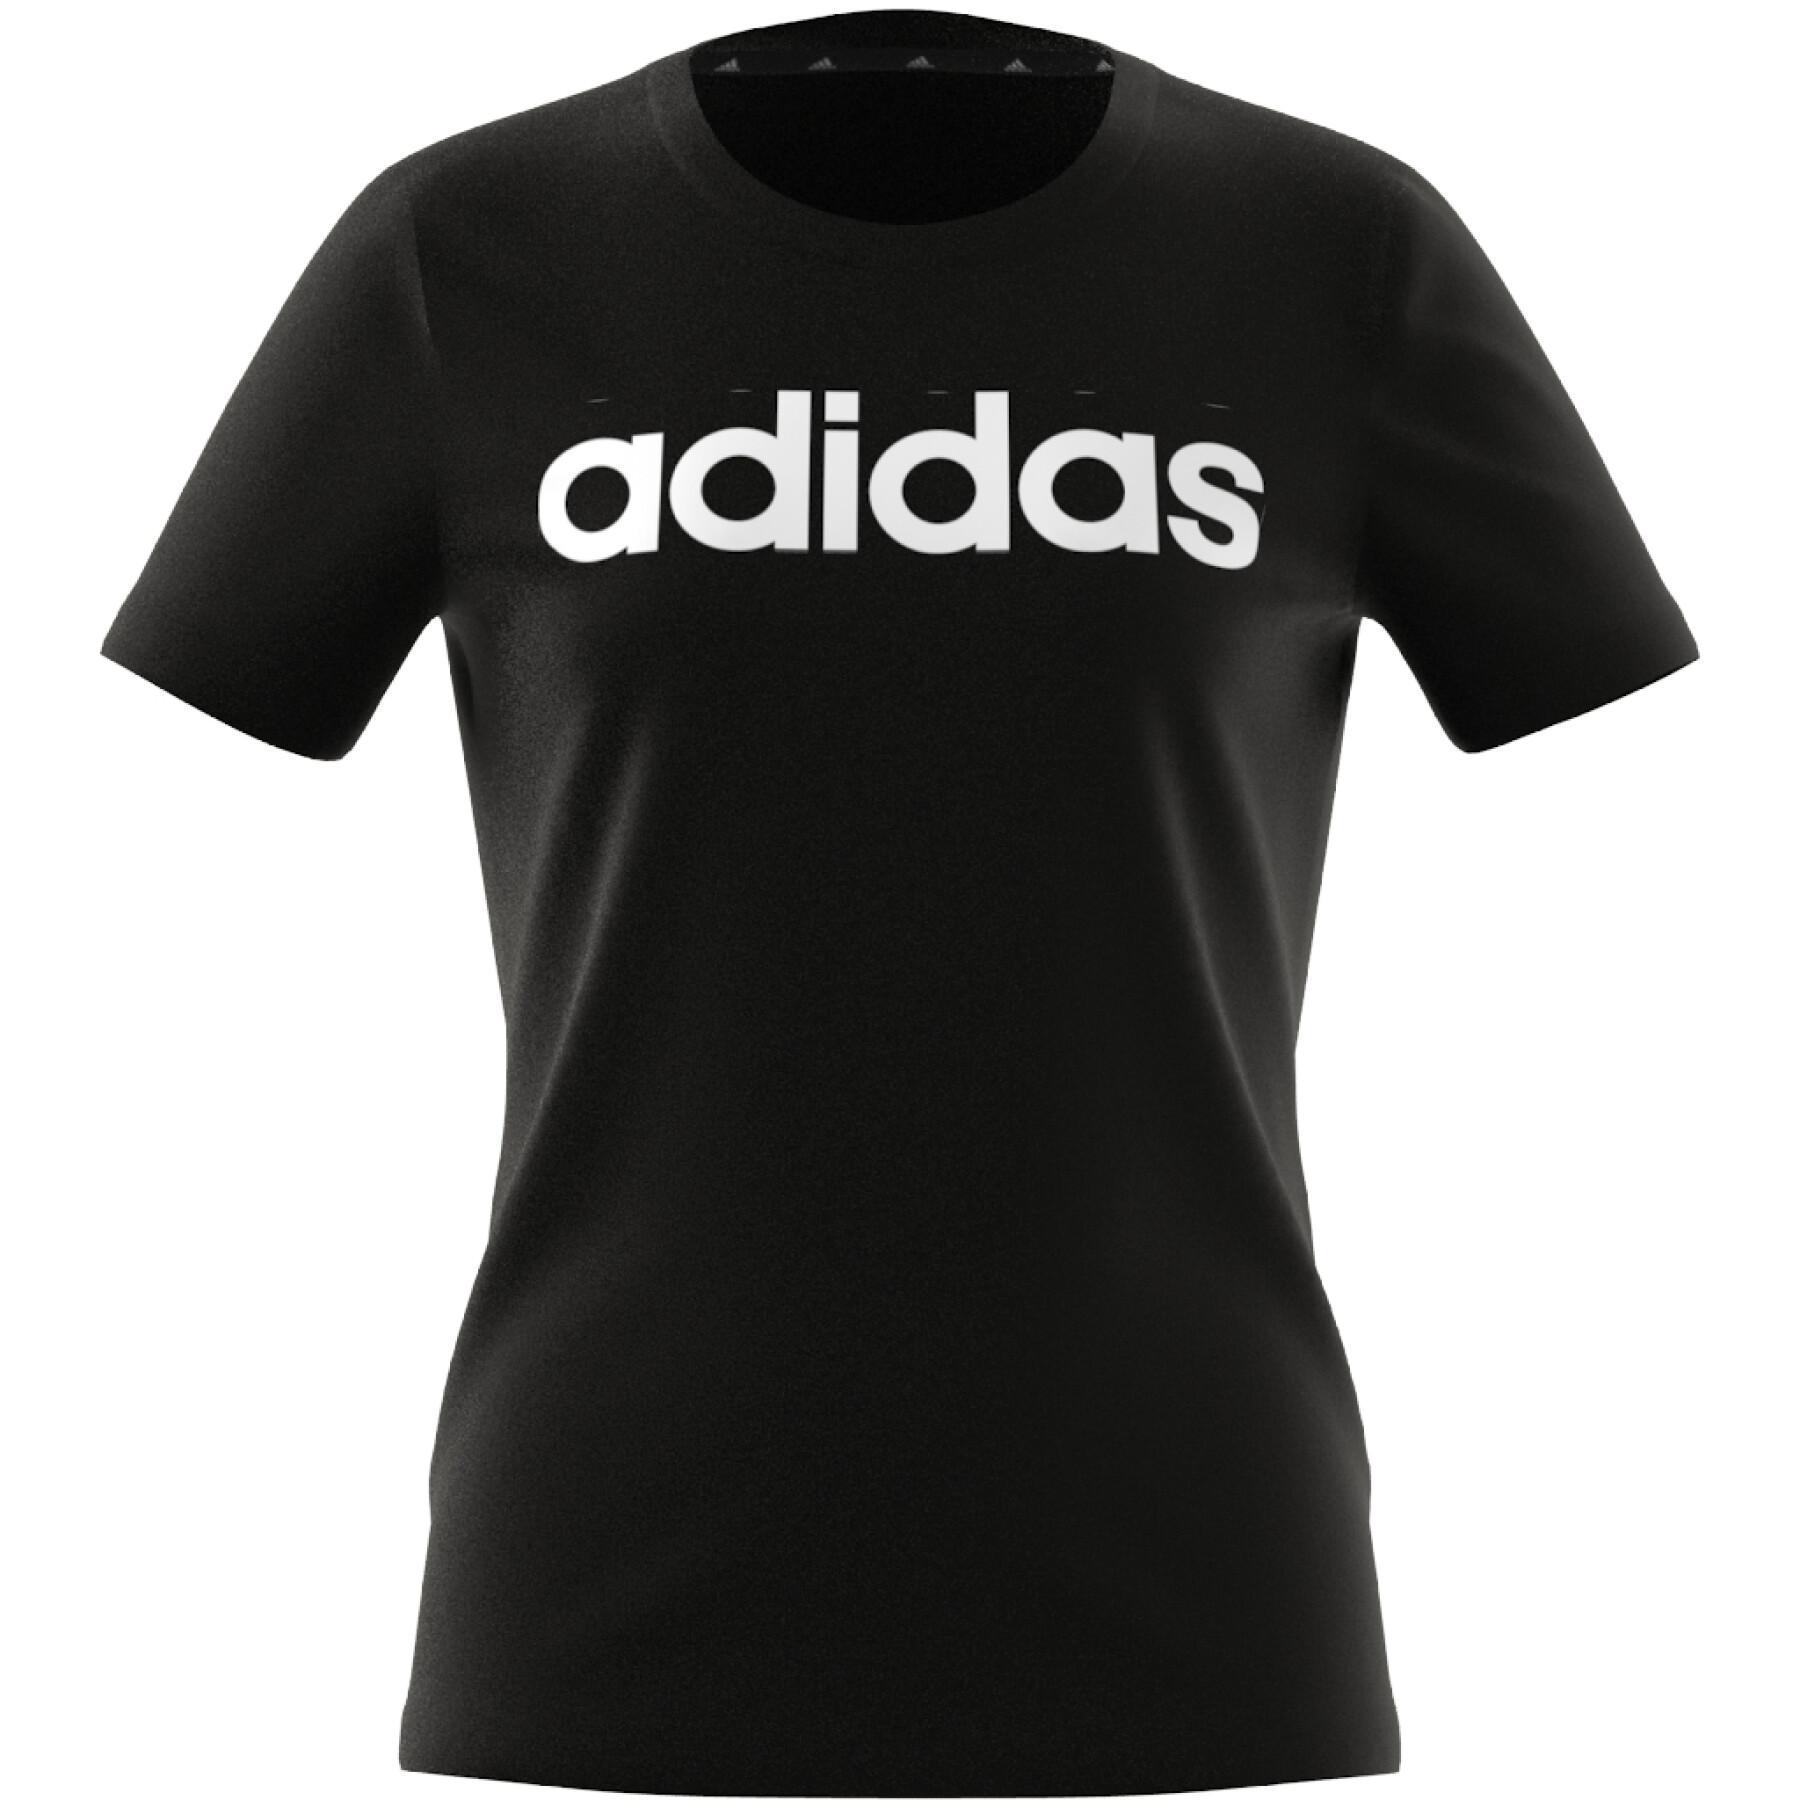 t-shirt Girl\'s Textile polos Essentials Linear cotton - Handball adidas - and Logo wear logo - T-shirts